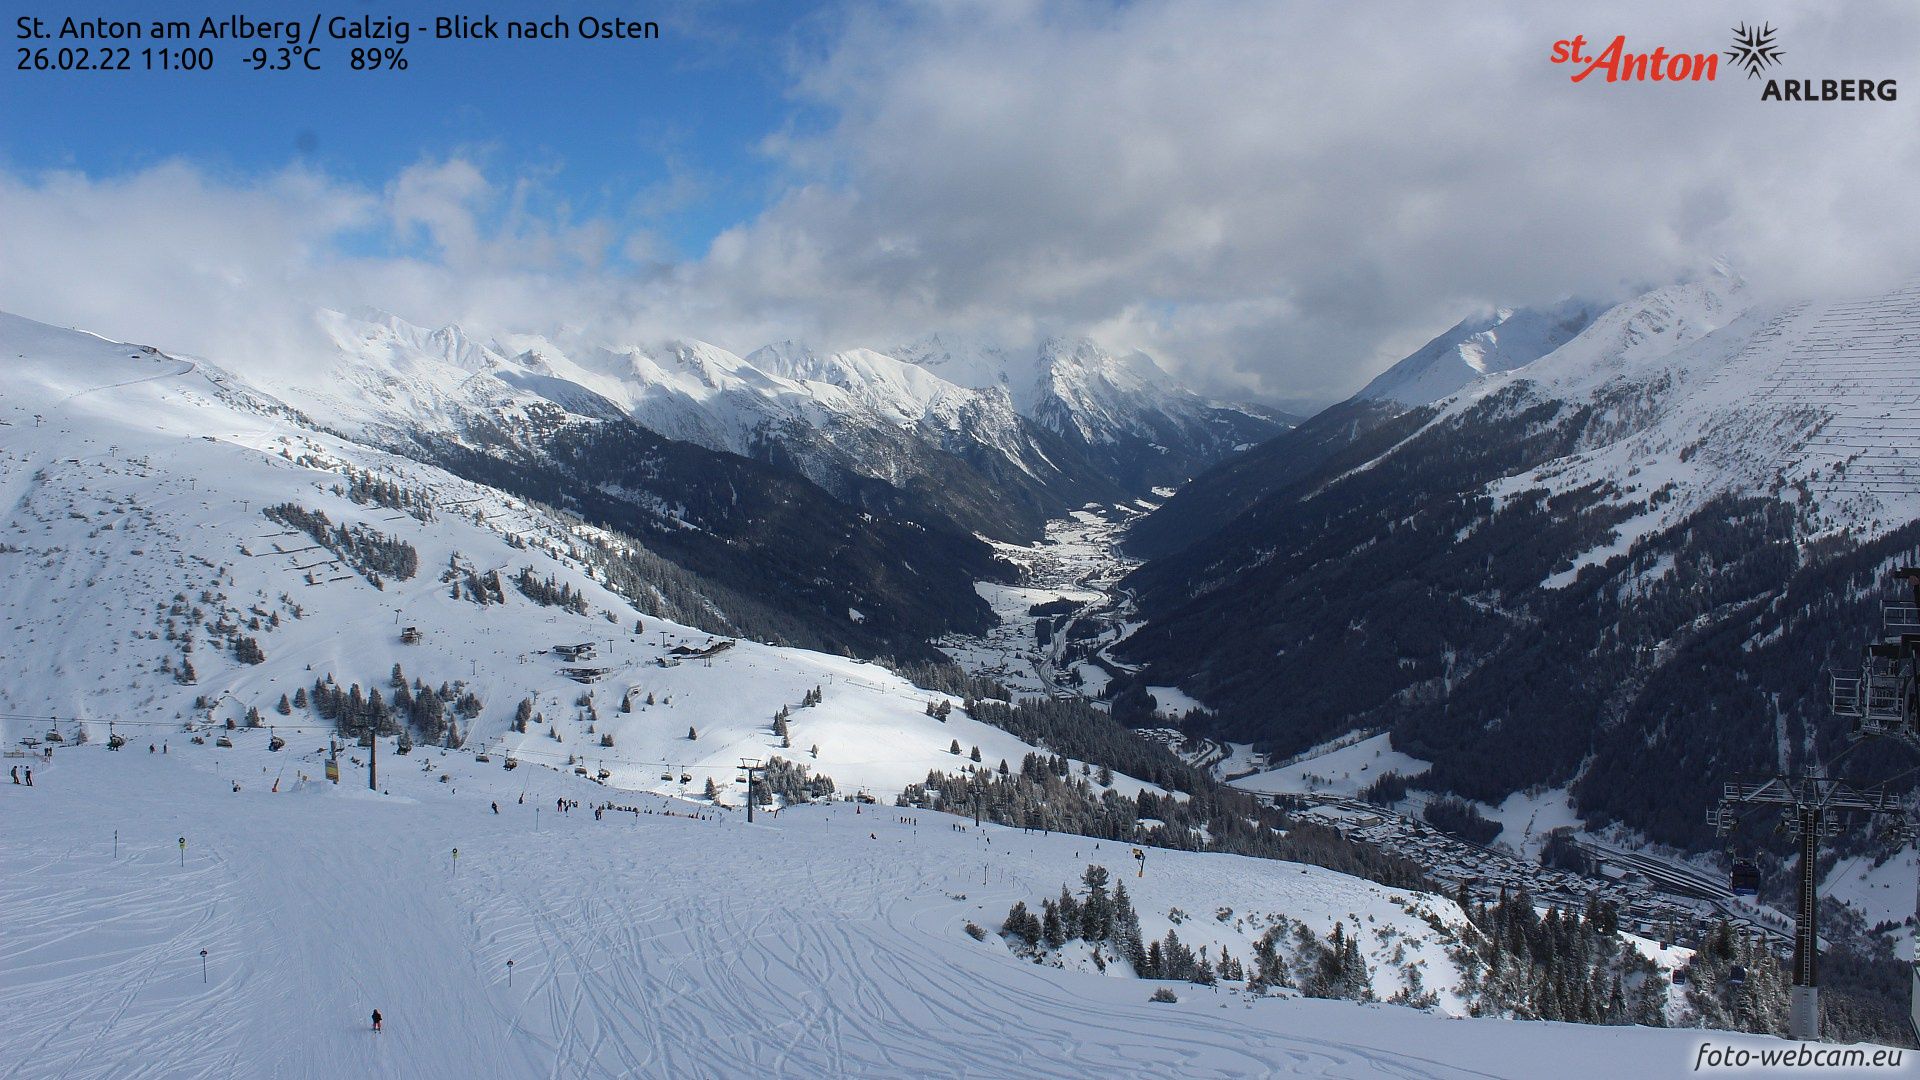 Some fresh snow in Sankt Anton am Arlberg (foto-webcam.eu)